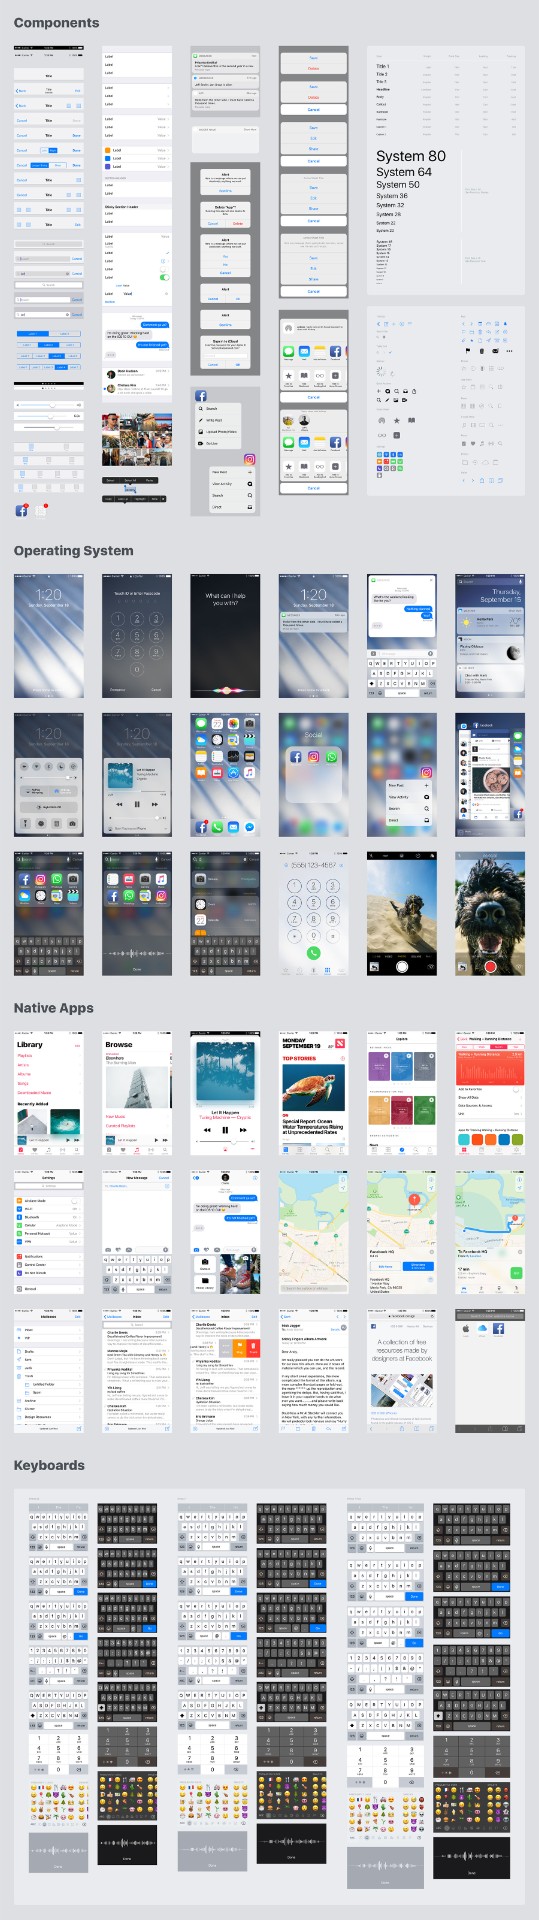 Facebook iOS 10 GUI1